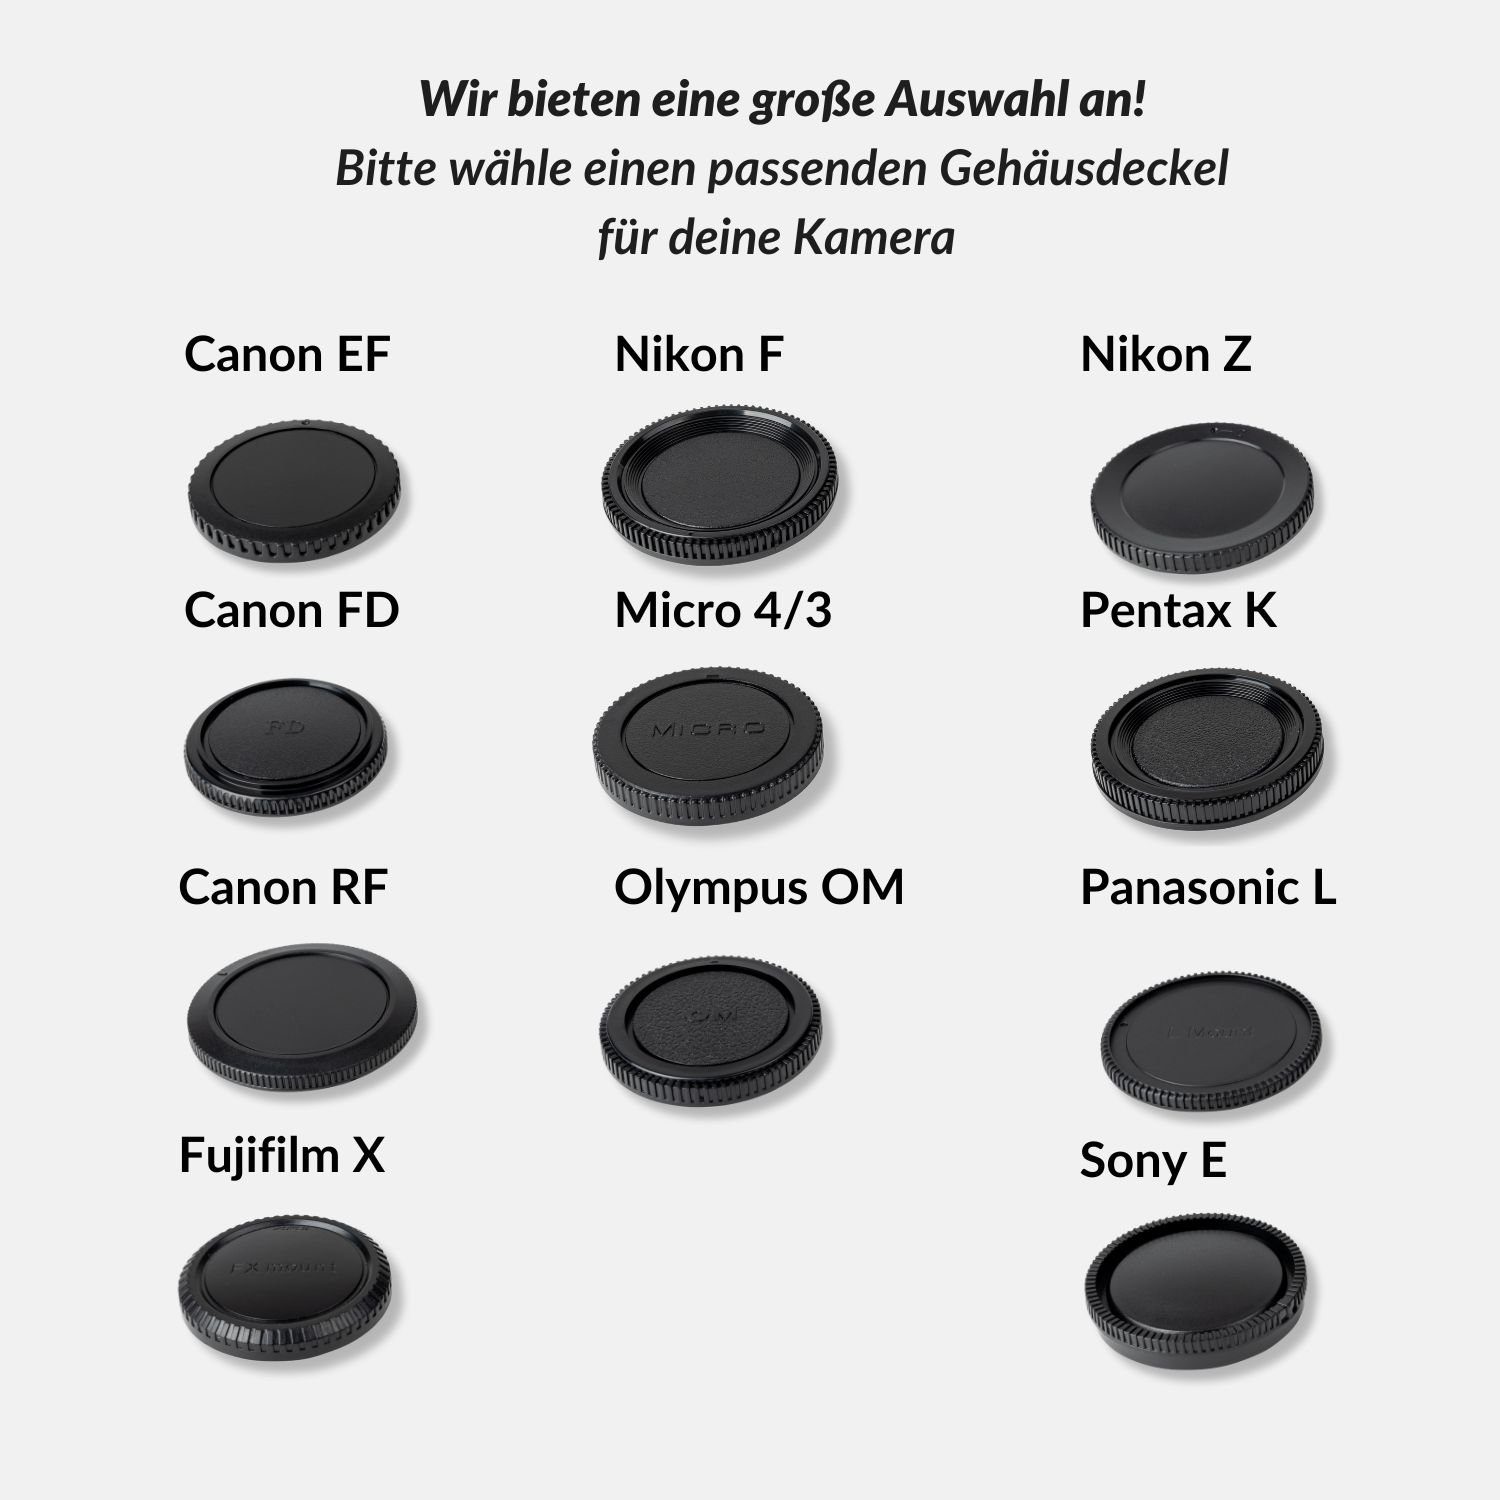 Body L-Bajonett, Panasonic Lens-Aid Cap, DSLR, Lumix Gehäusedeckel für Systemkamera